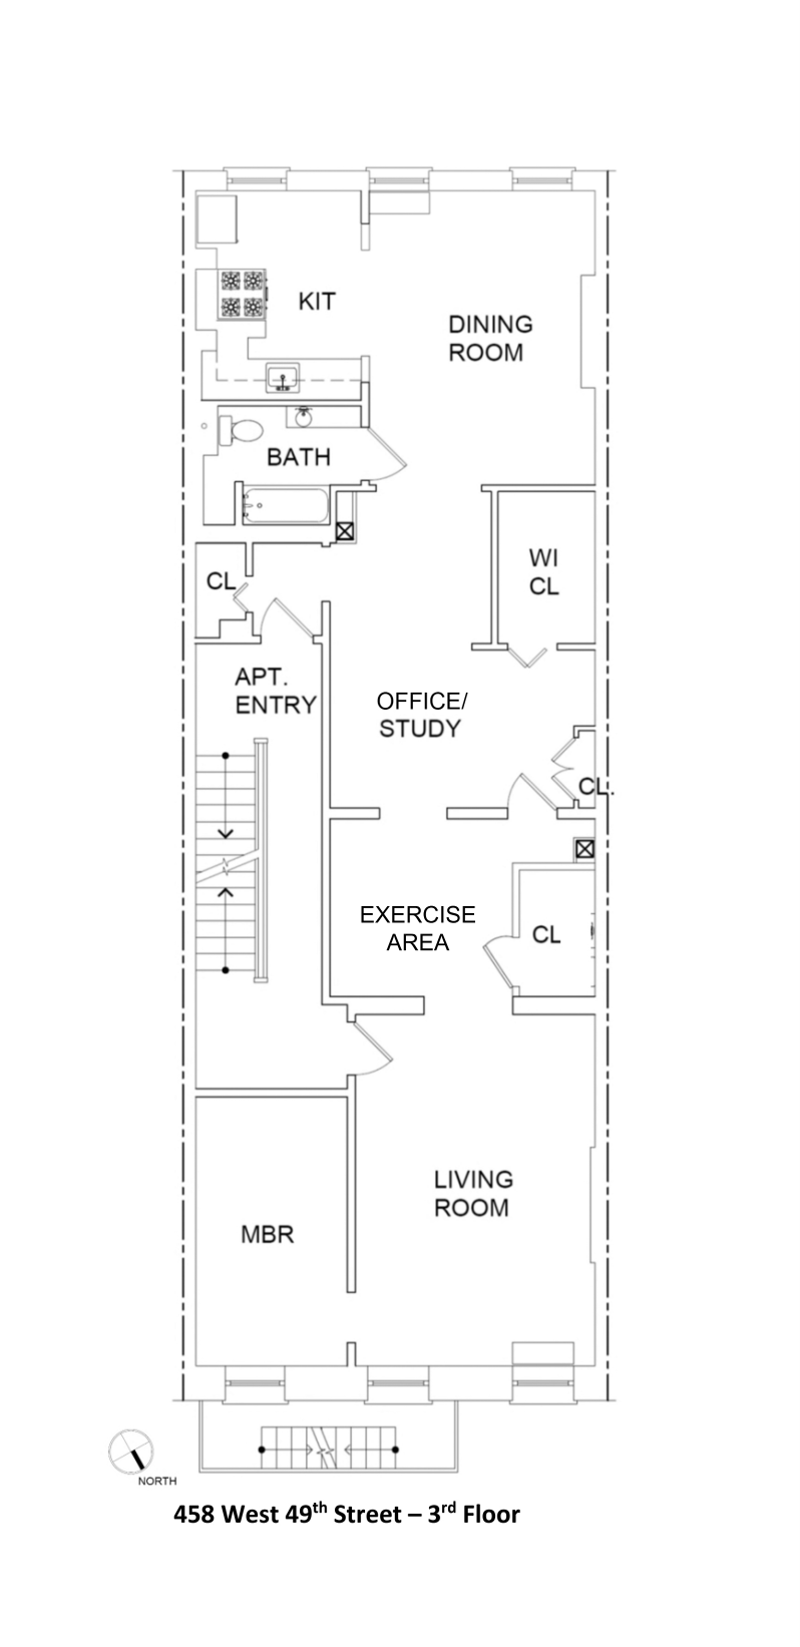 Floorplan for 458 West 49th Street, 3